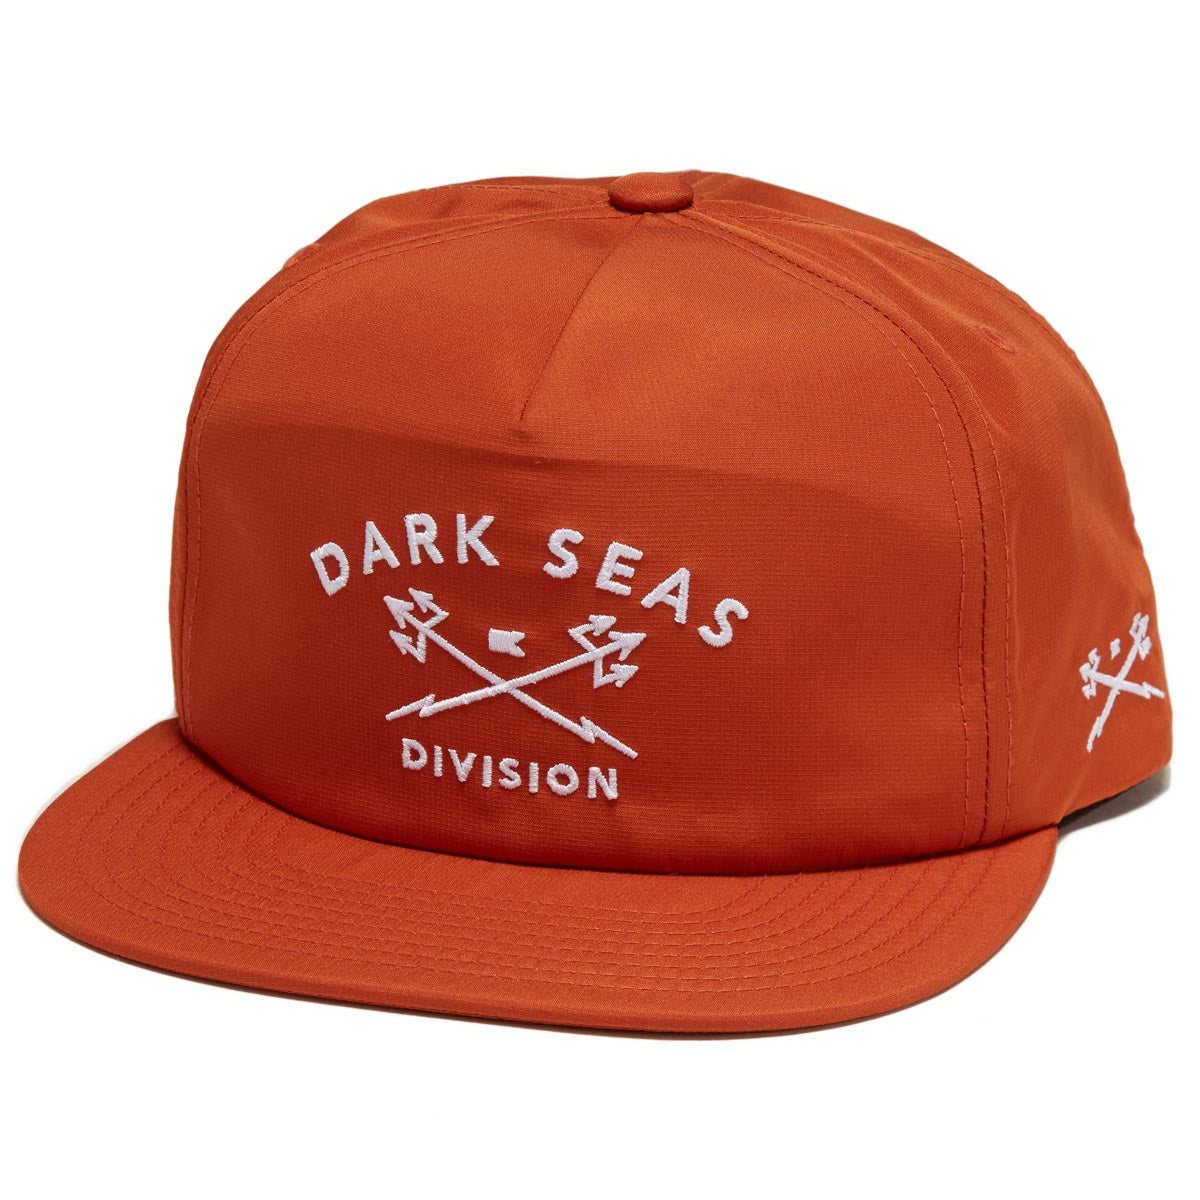 Dark Seas Tridents Nylon Hat - Rust image 1